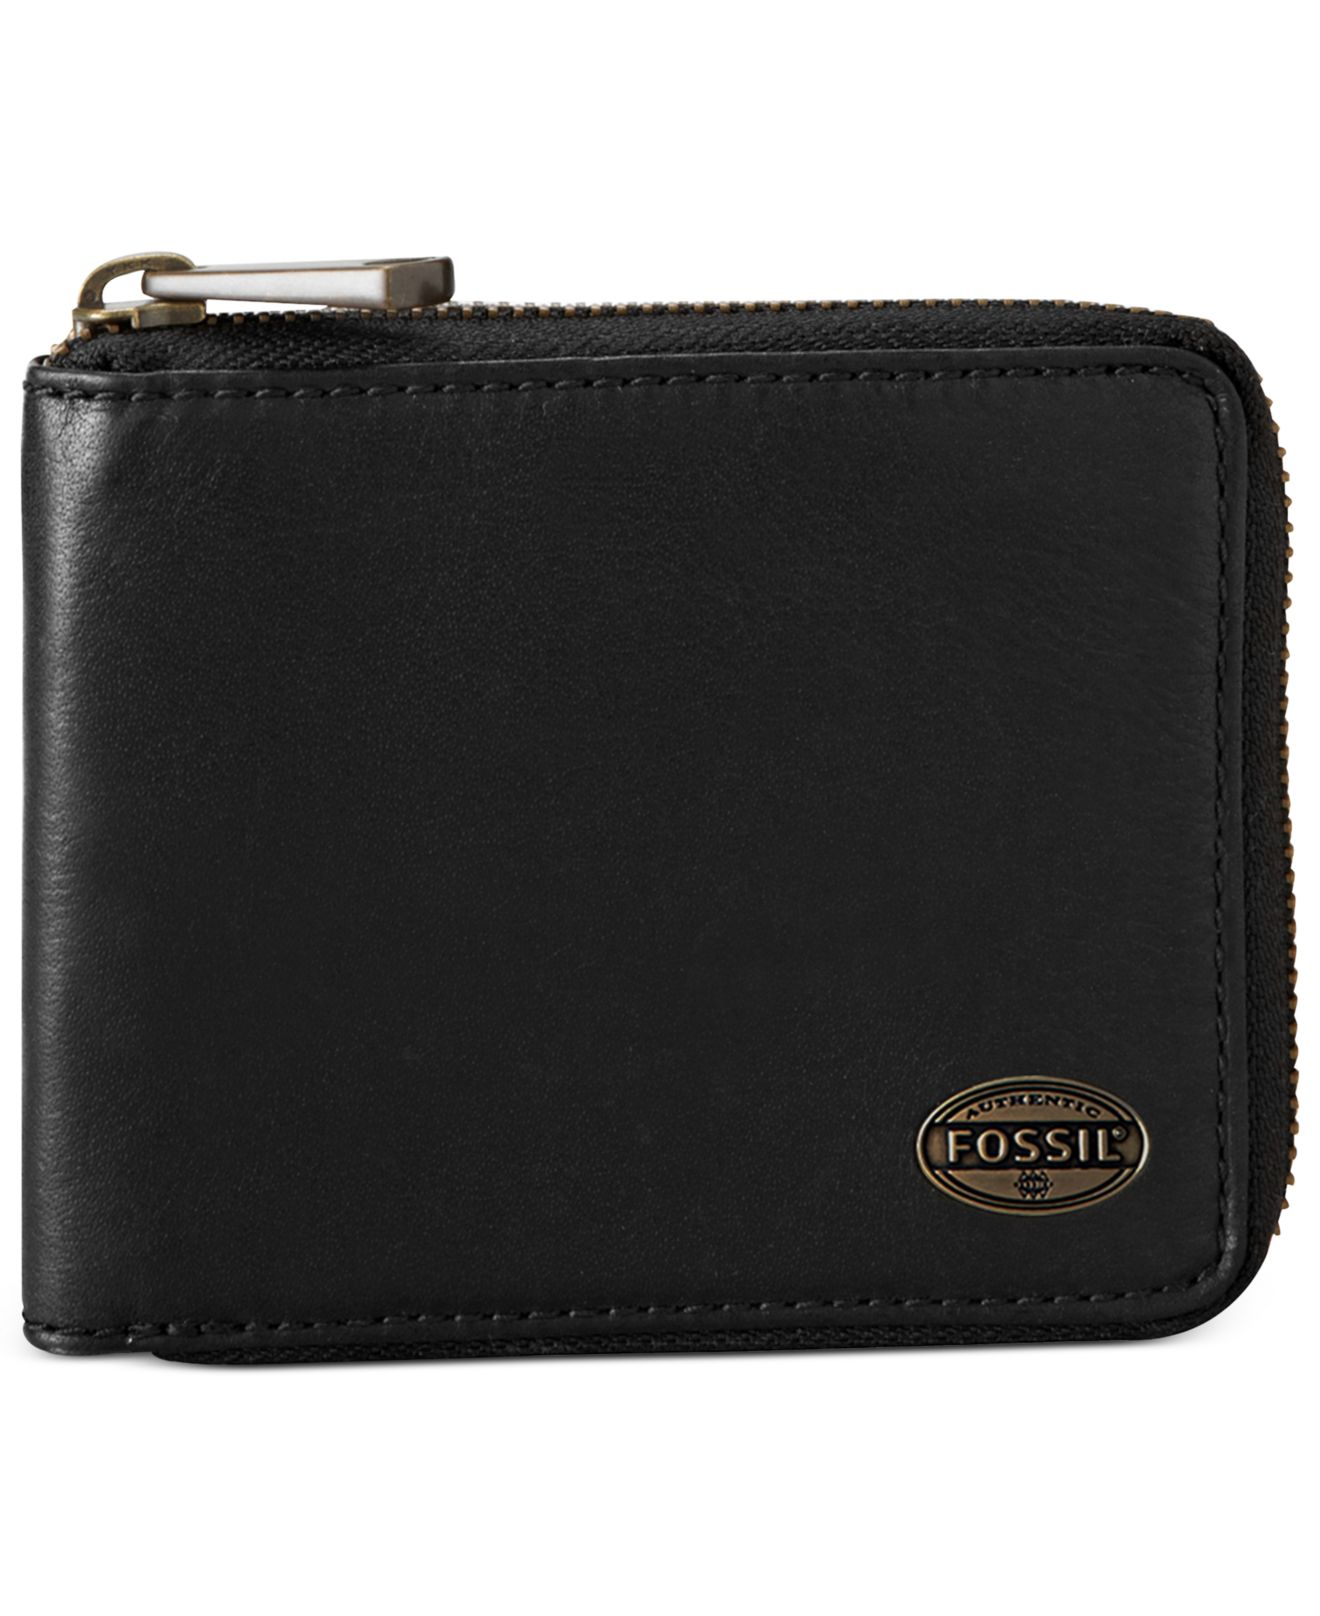 Fossil Estate Bifold Zippered Wallet in Black for Men - Lyst